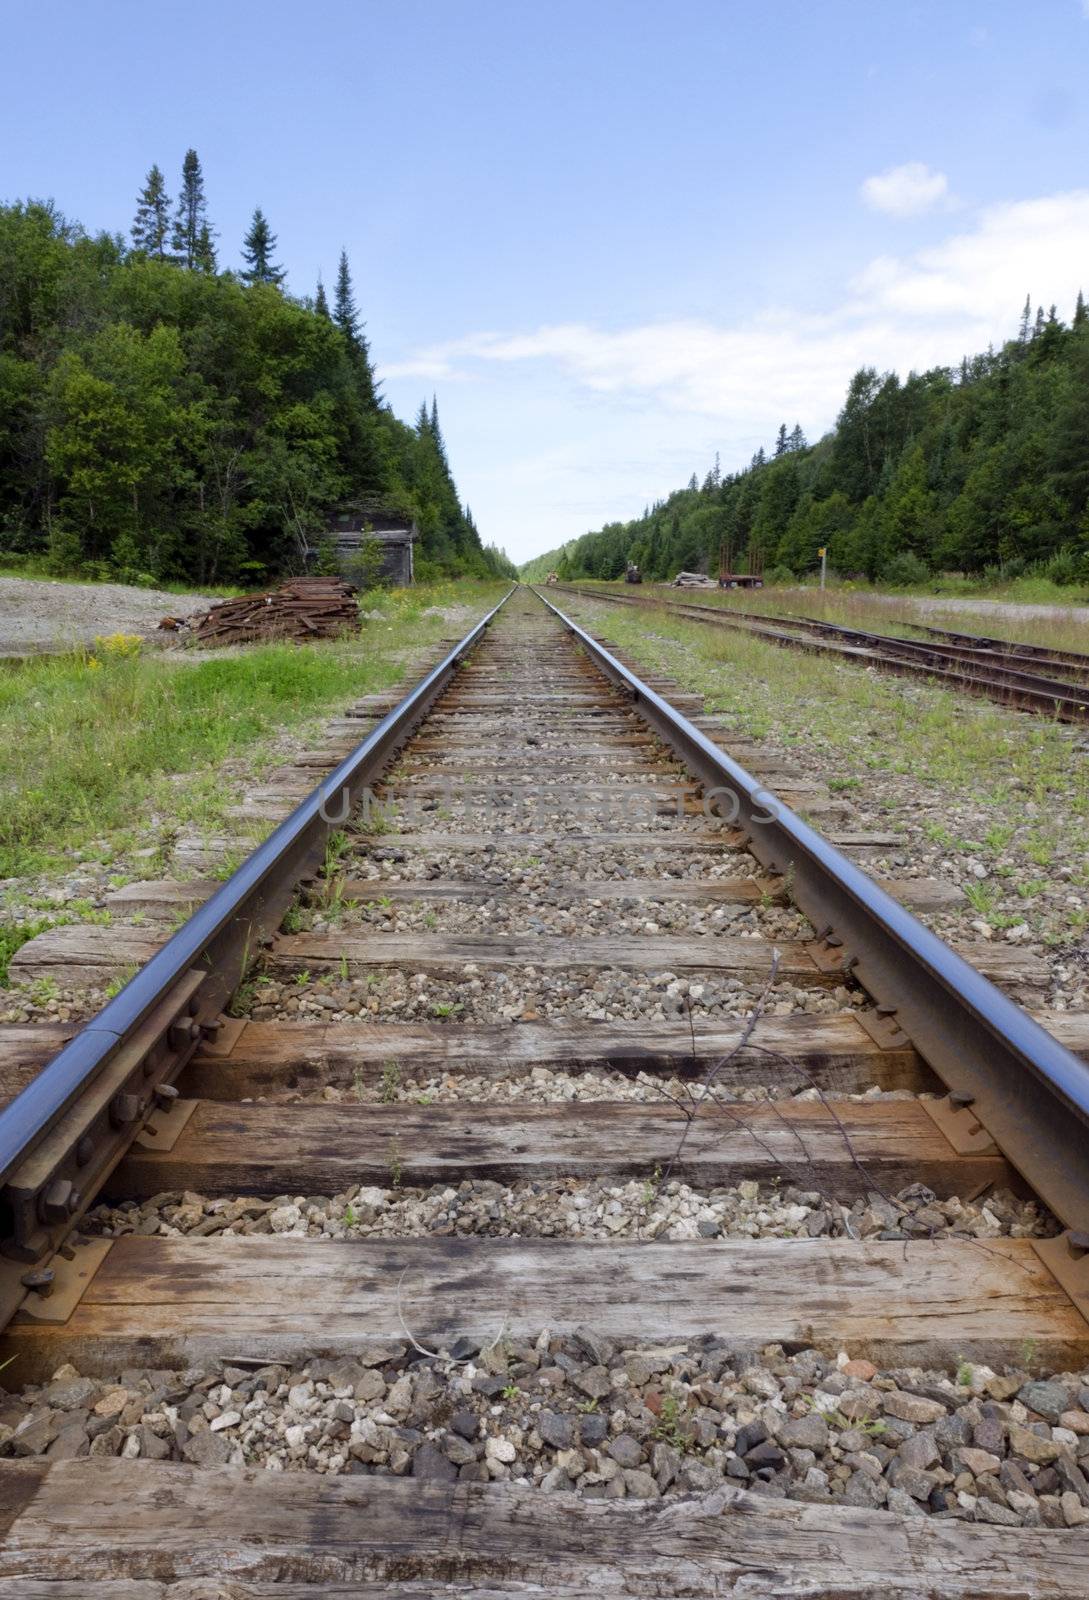 Railway tracks in a rural scene of northen Ontario, Canada